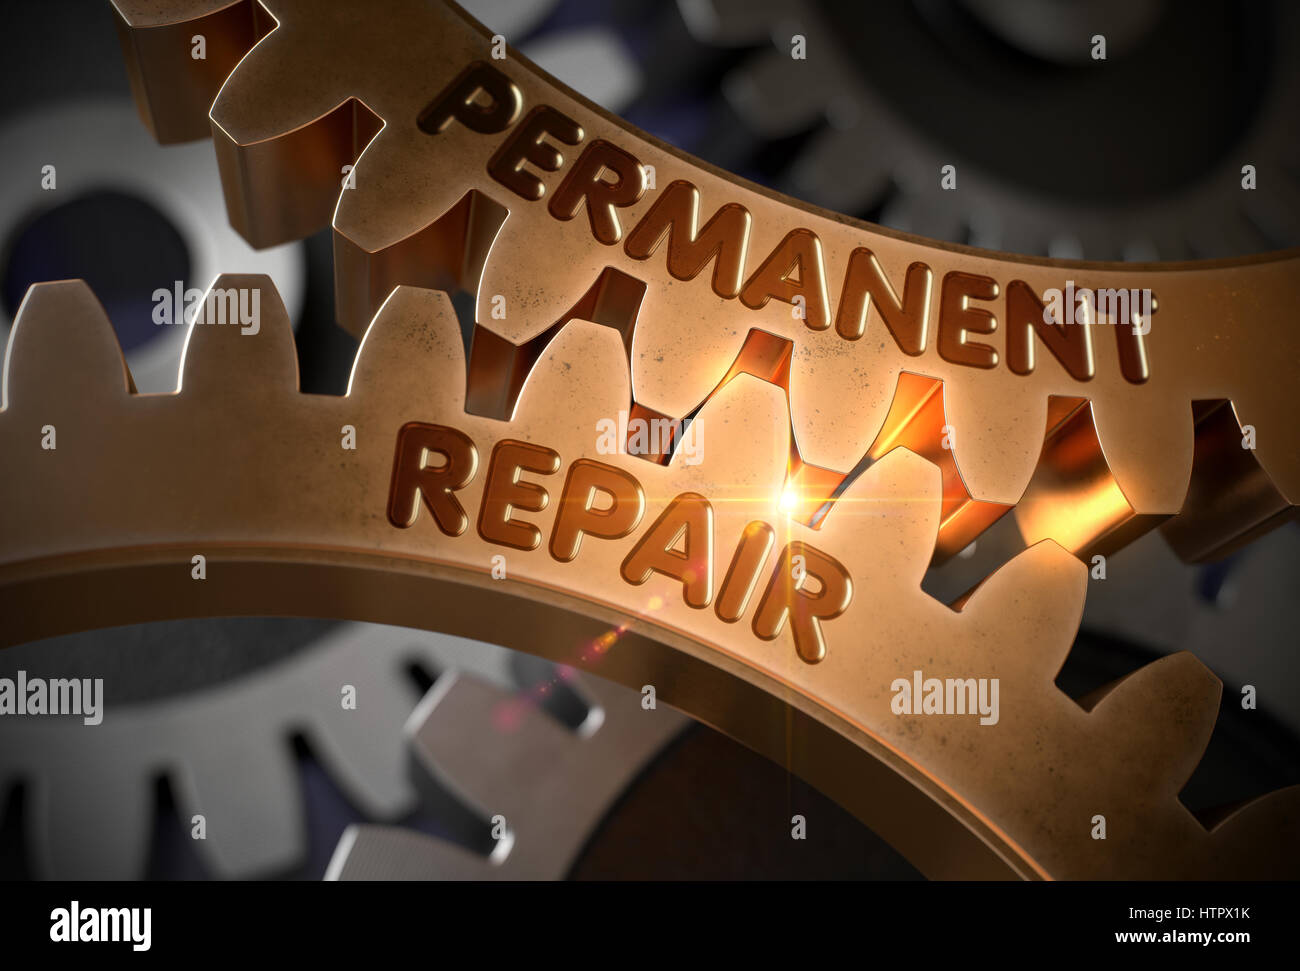 Permanent Repair Concept. Golden Gears. 3D Illustration. Stock Photo